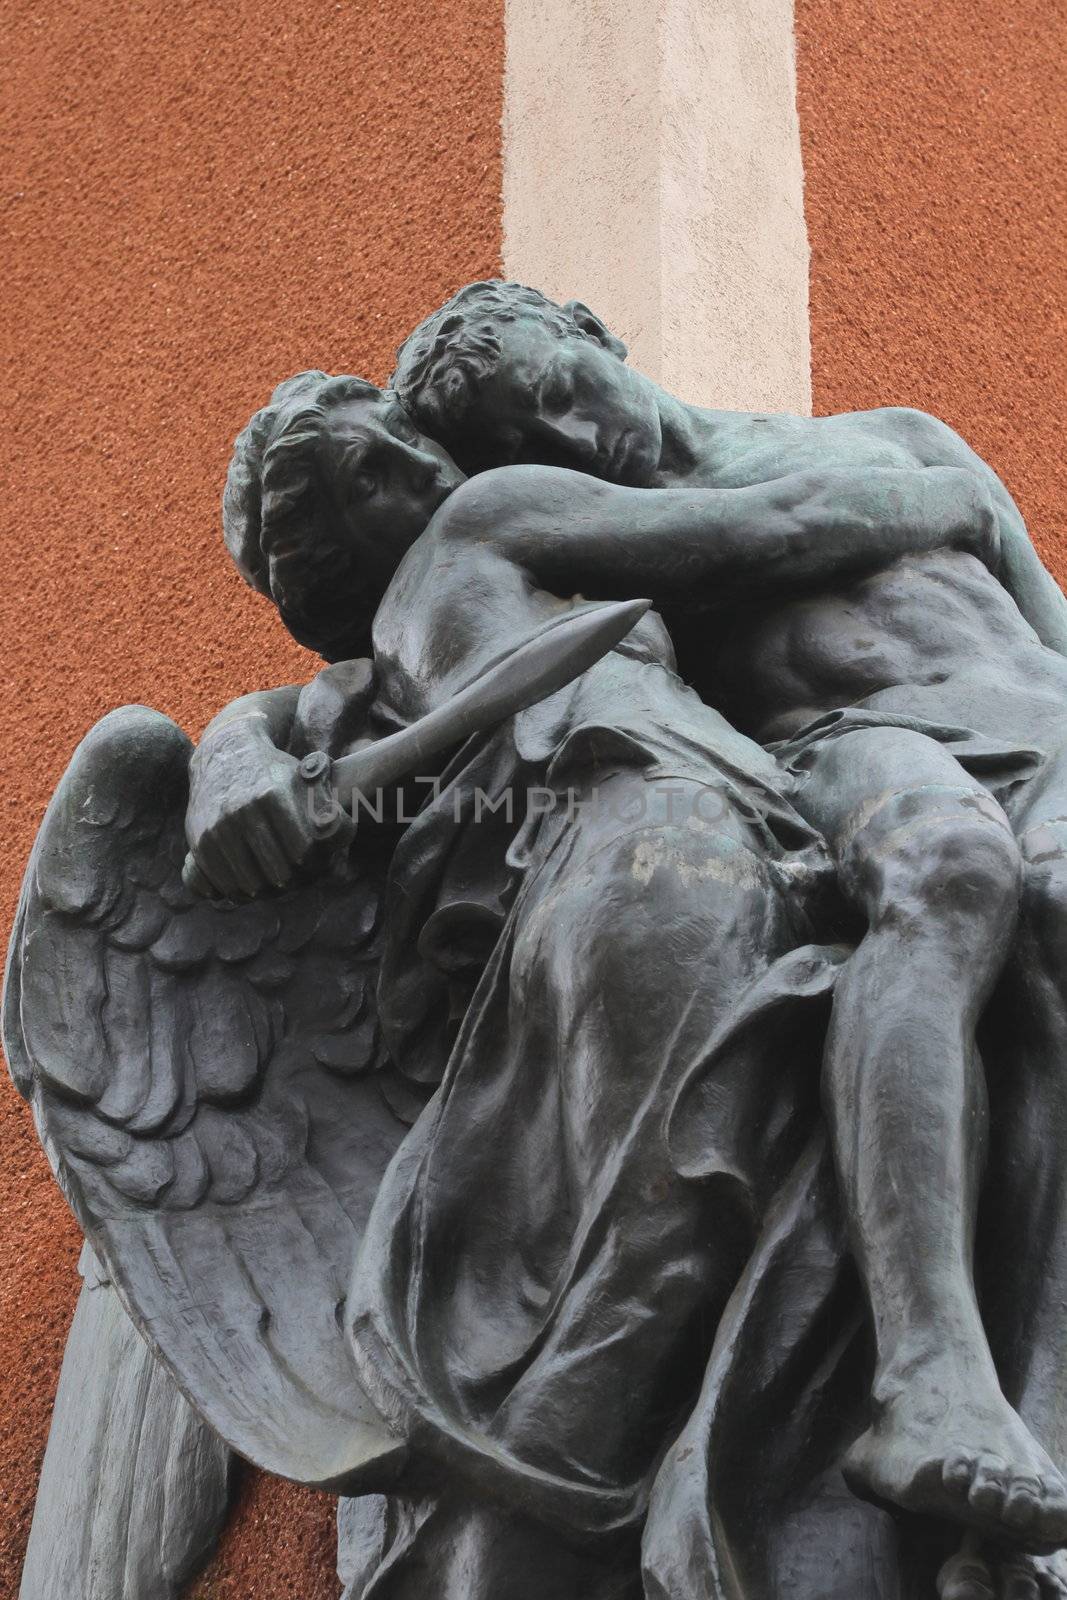 war memorial monument, Marostica, veneto, Italy. by lifeinapixel